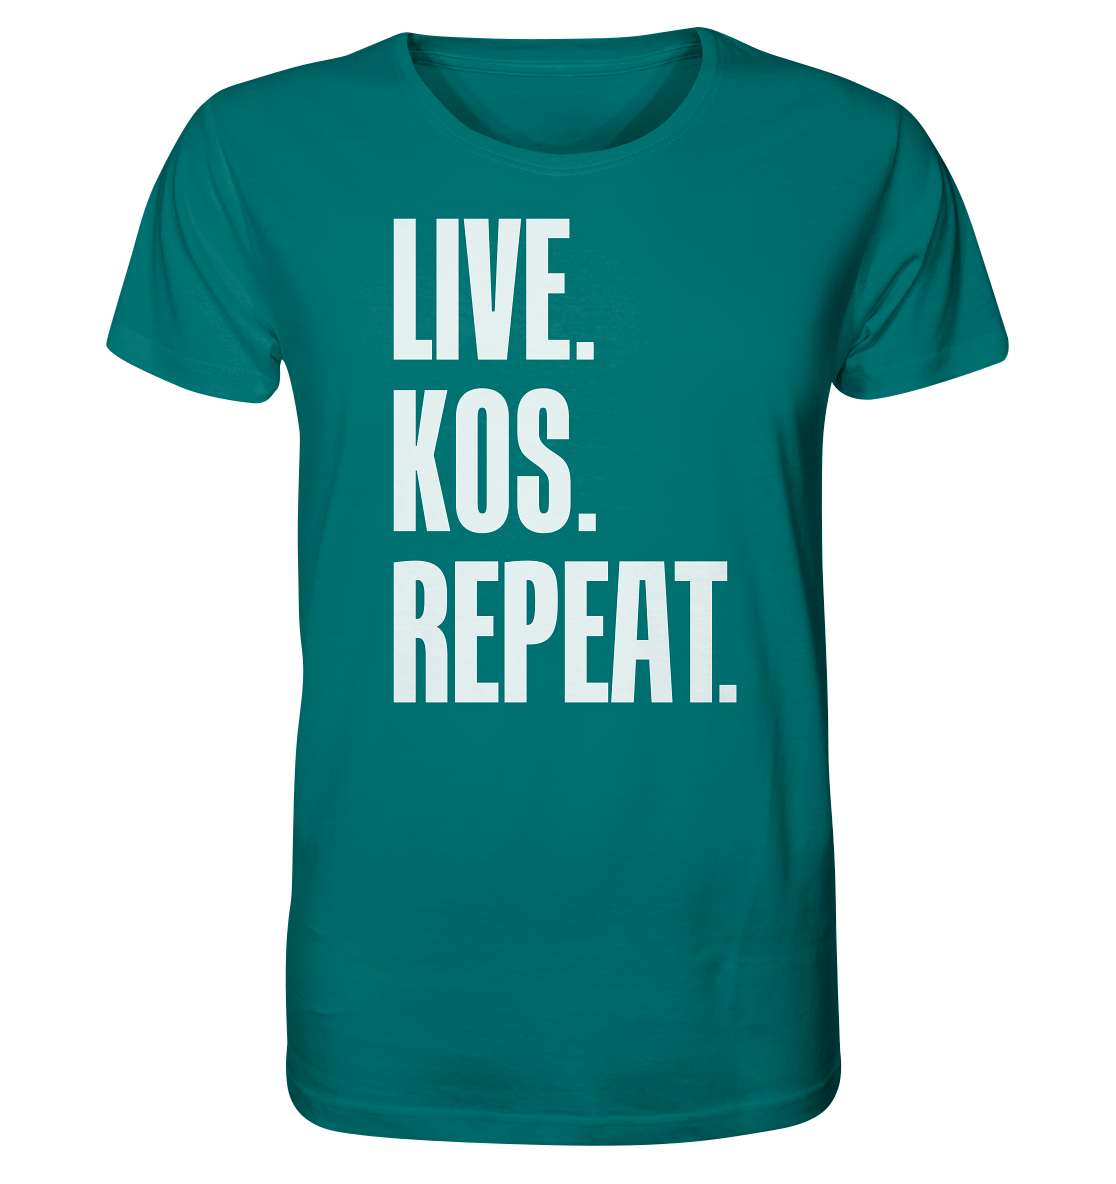 LIVE. KOS. REPEAT. - Organic Shirt